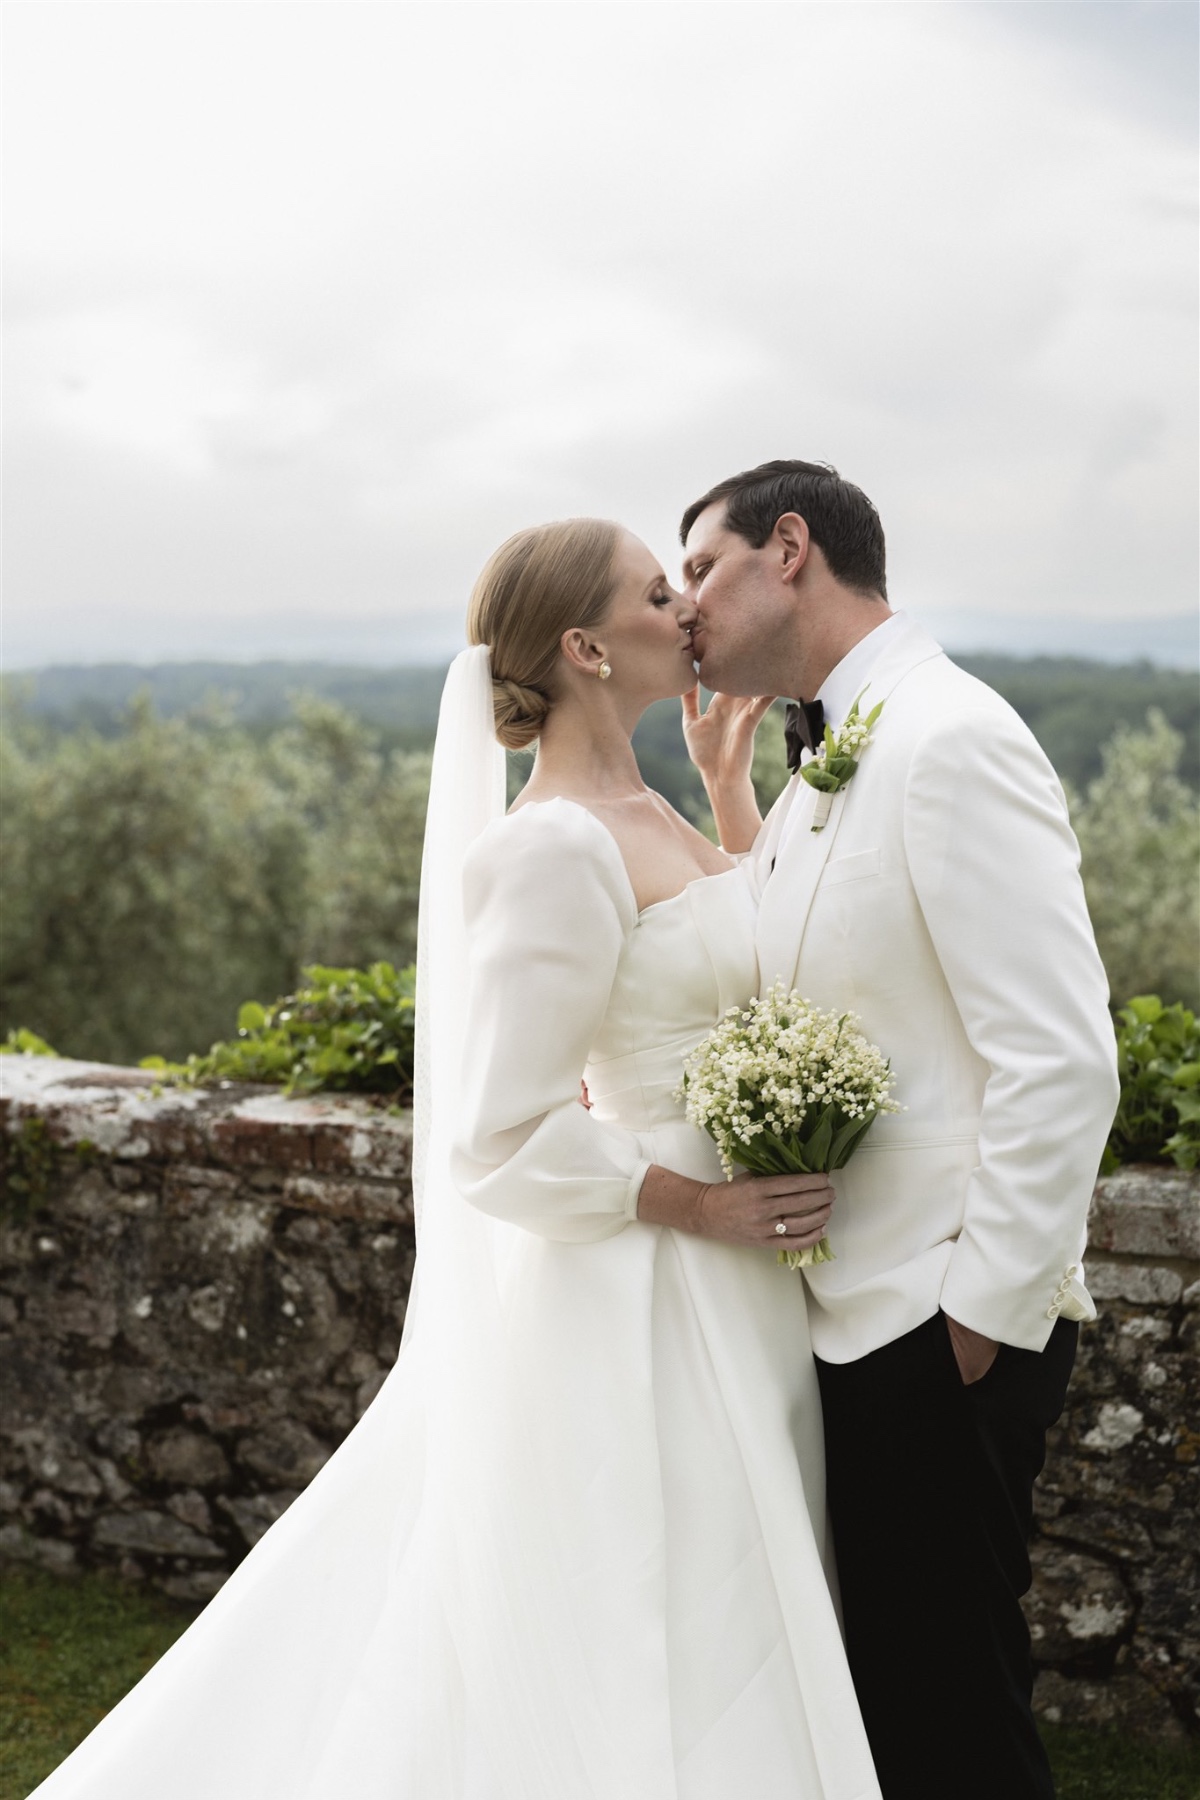 Romantic couple kissing at Italian villa wedding 